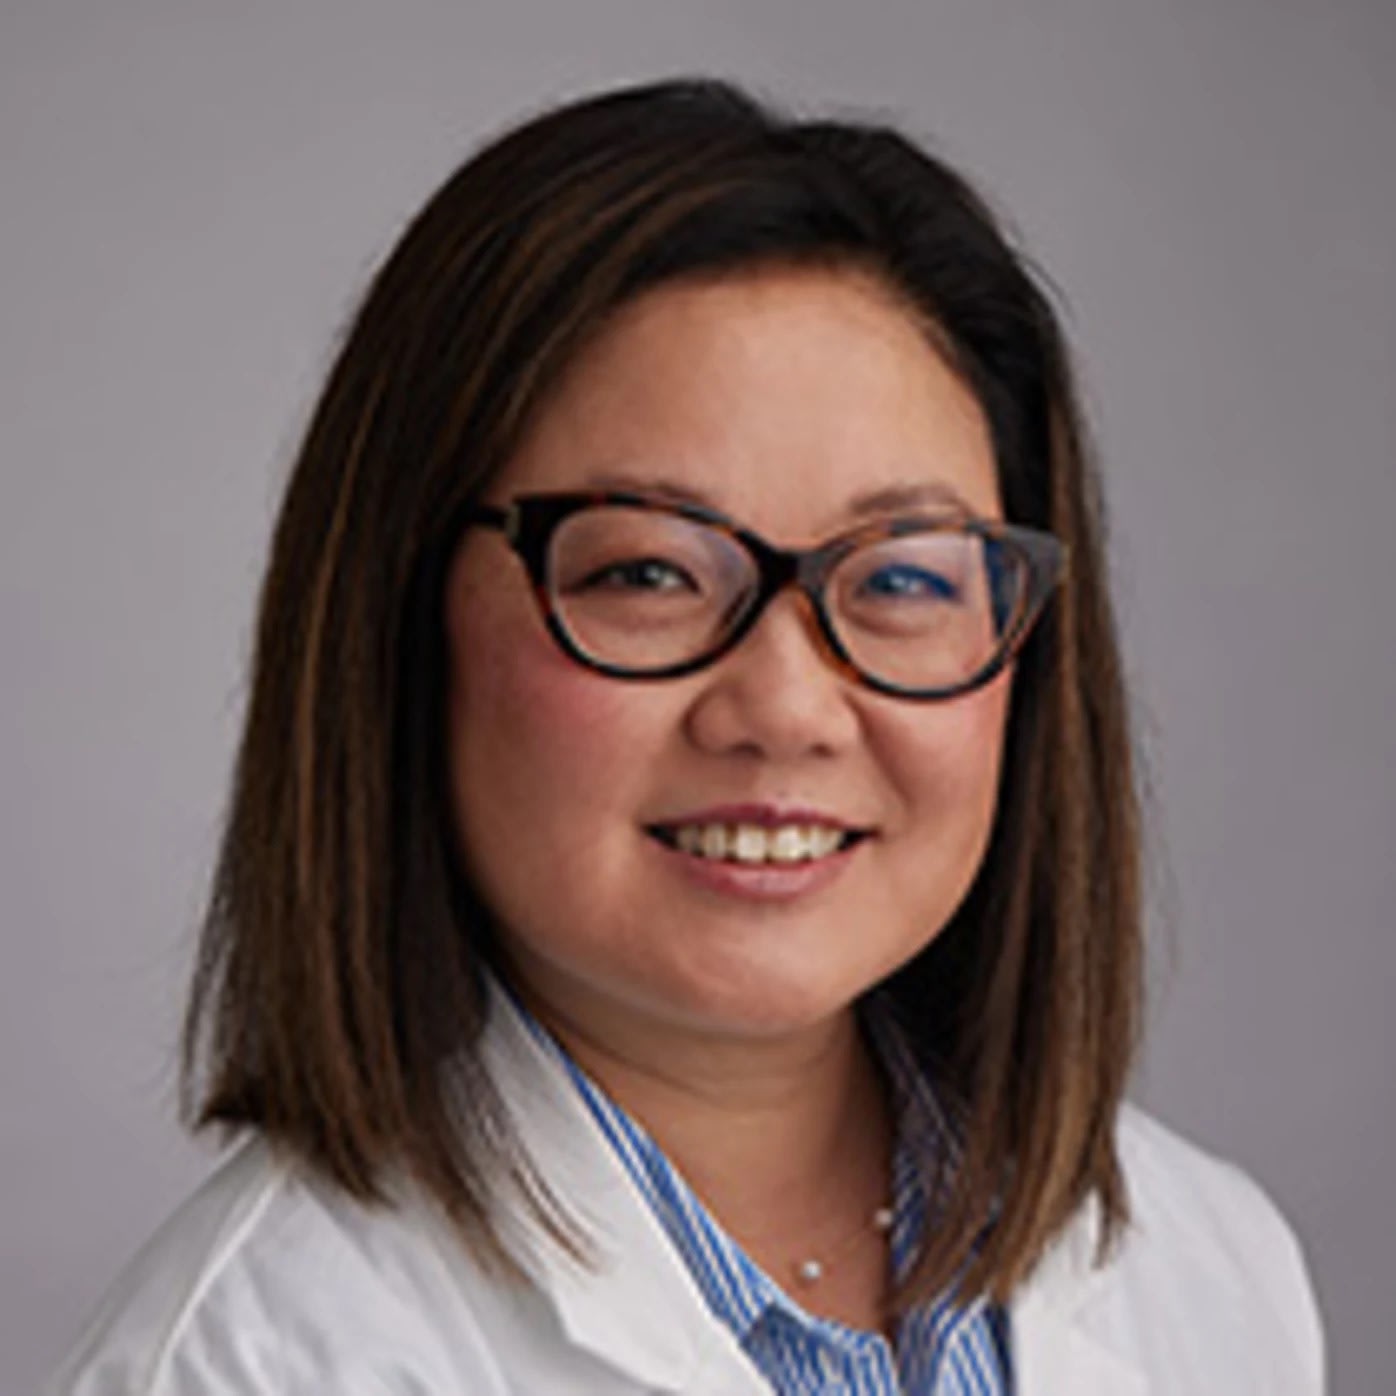 Dr. Lori Uyeno